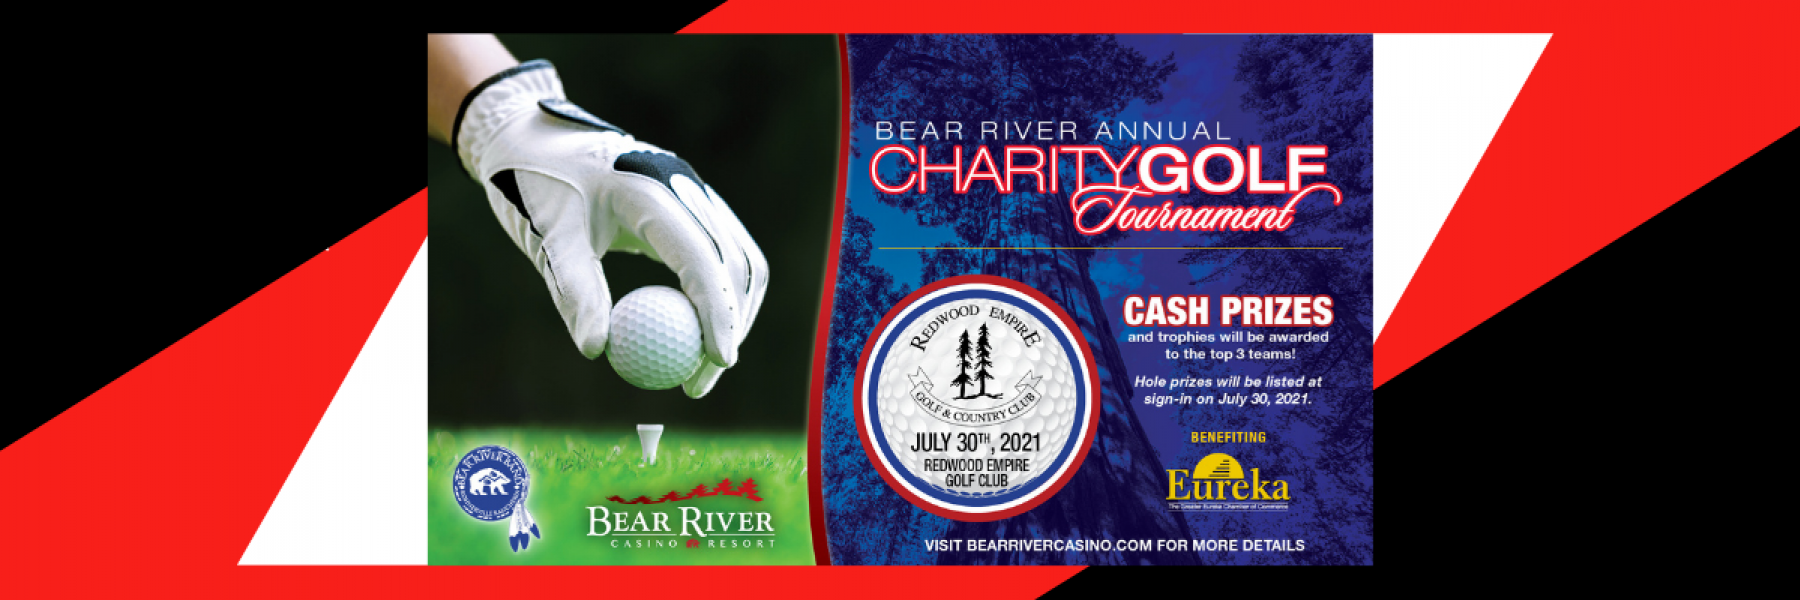 eureka chamber bear river charity golf tournament